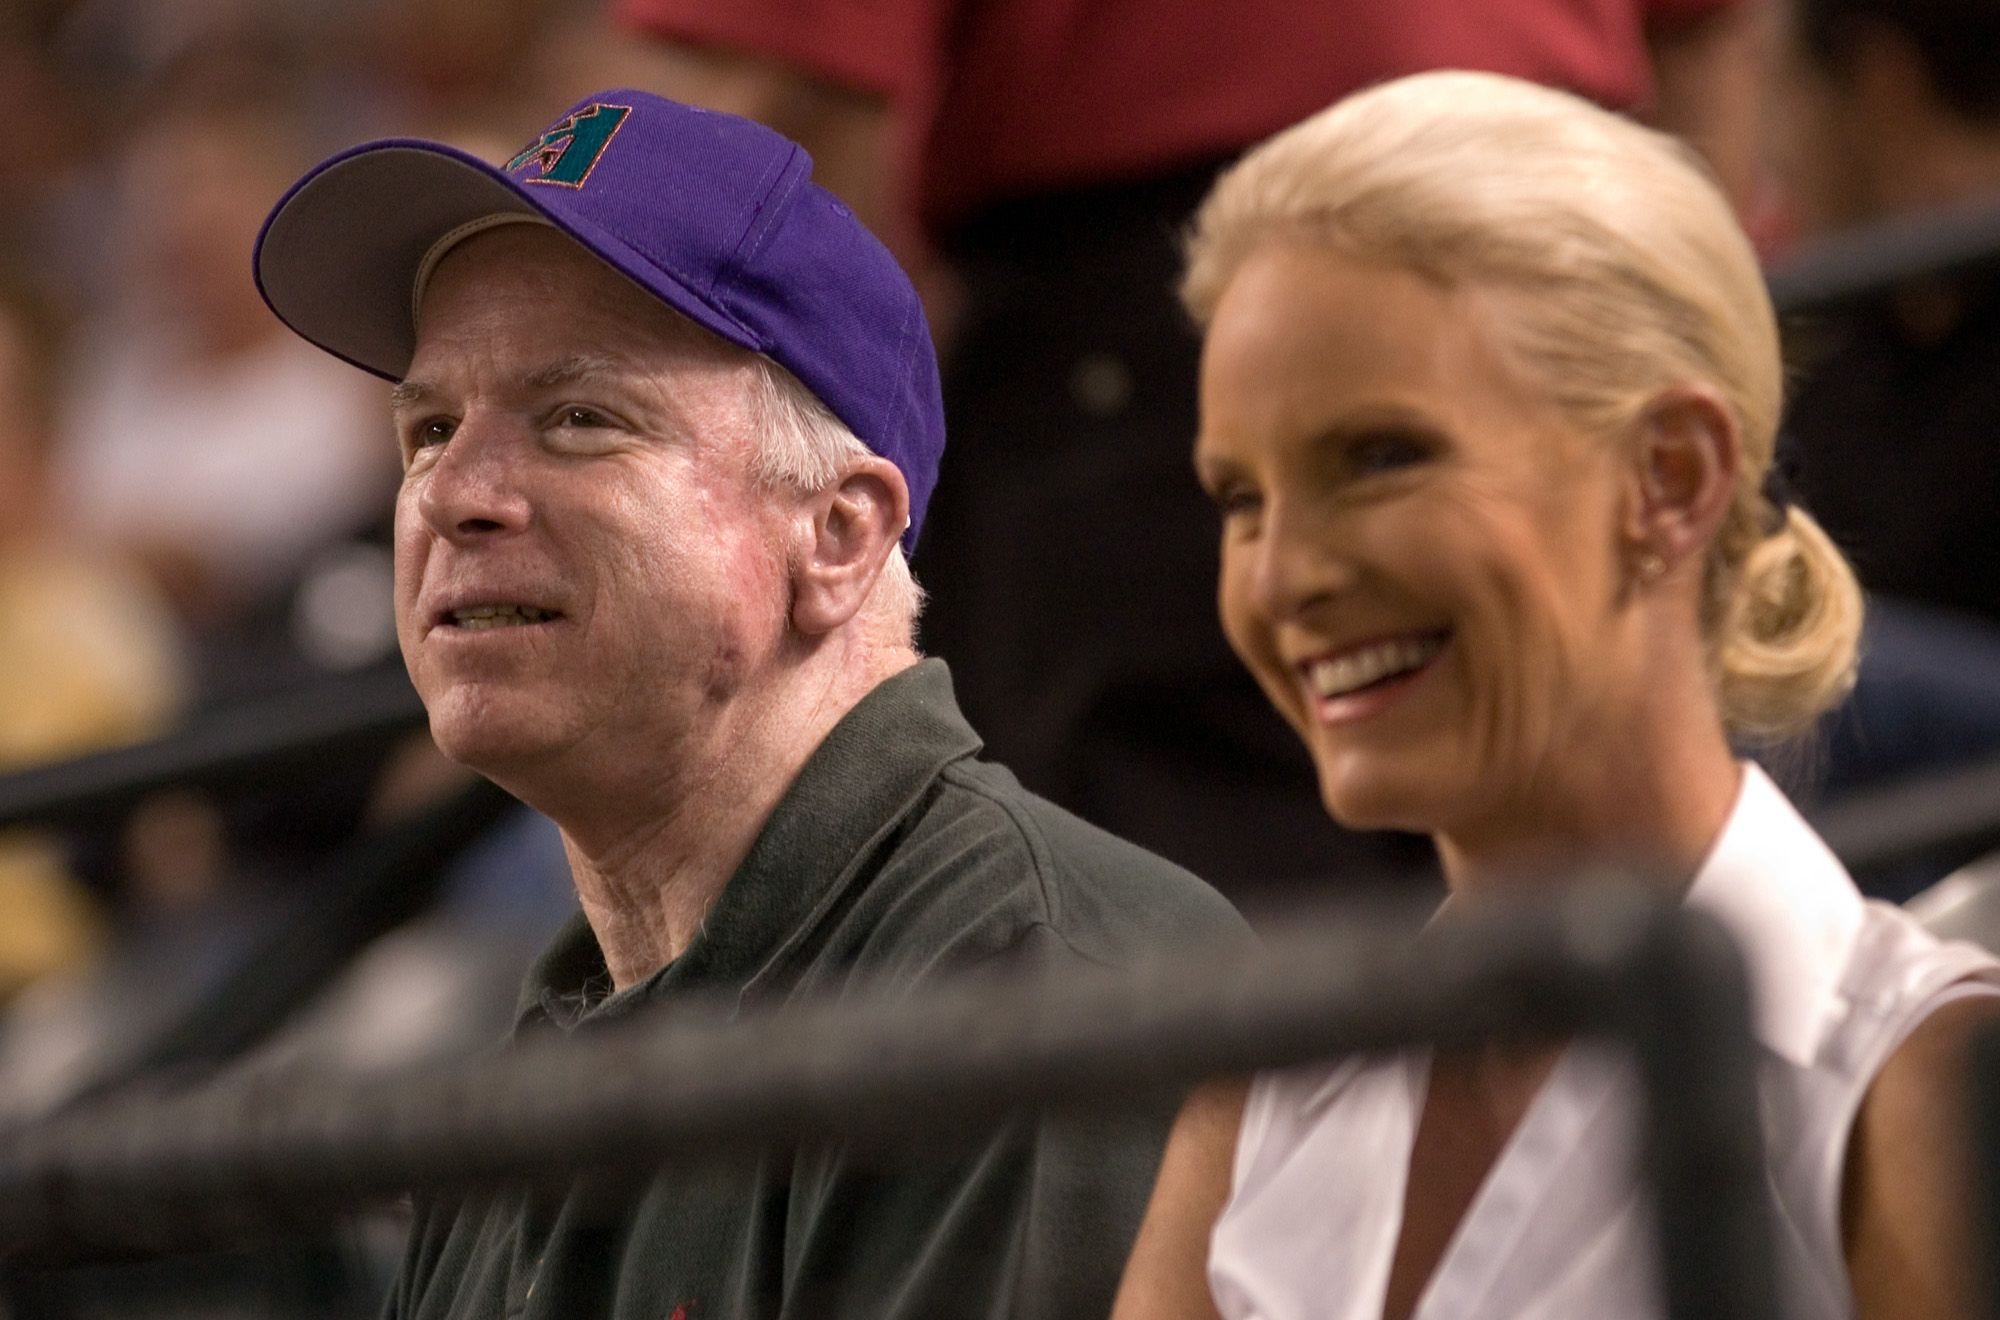 'A good voice for Arizona': Politicos and sports figures react to McCain's diagnosis